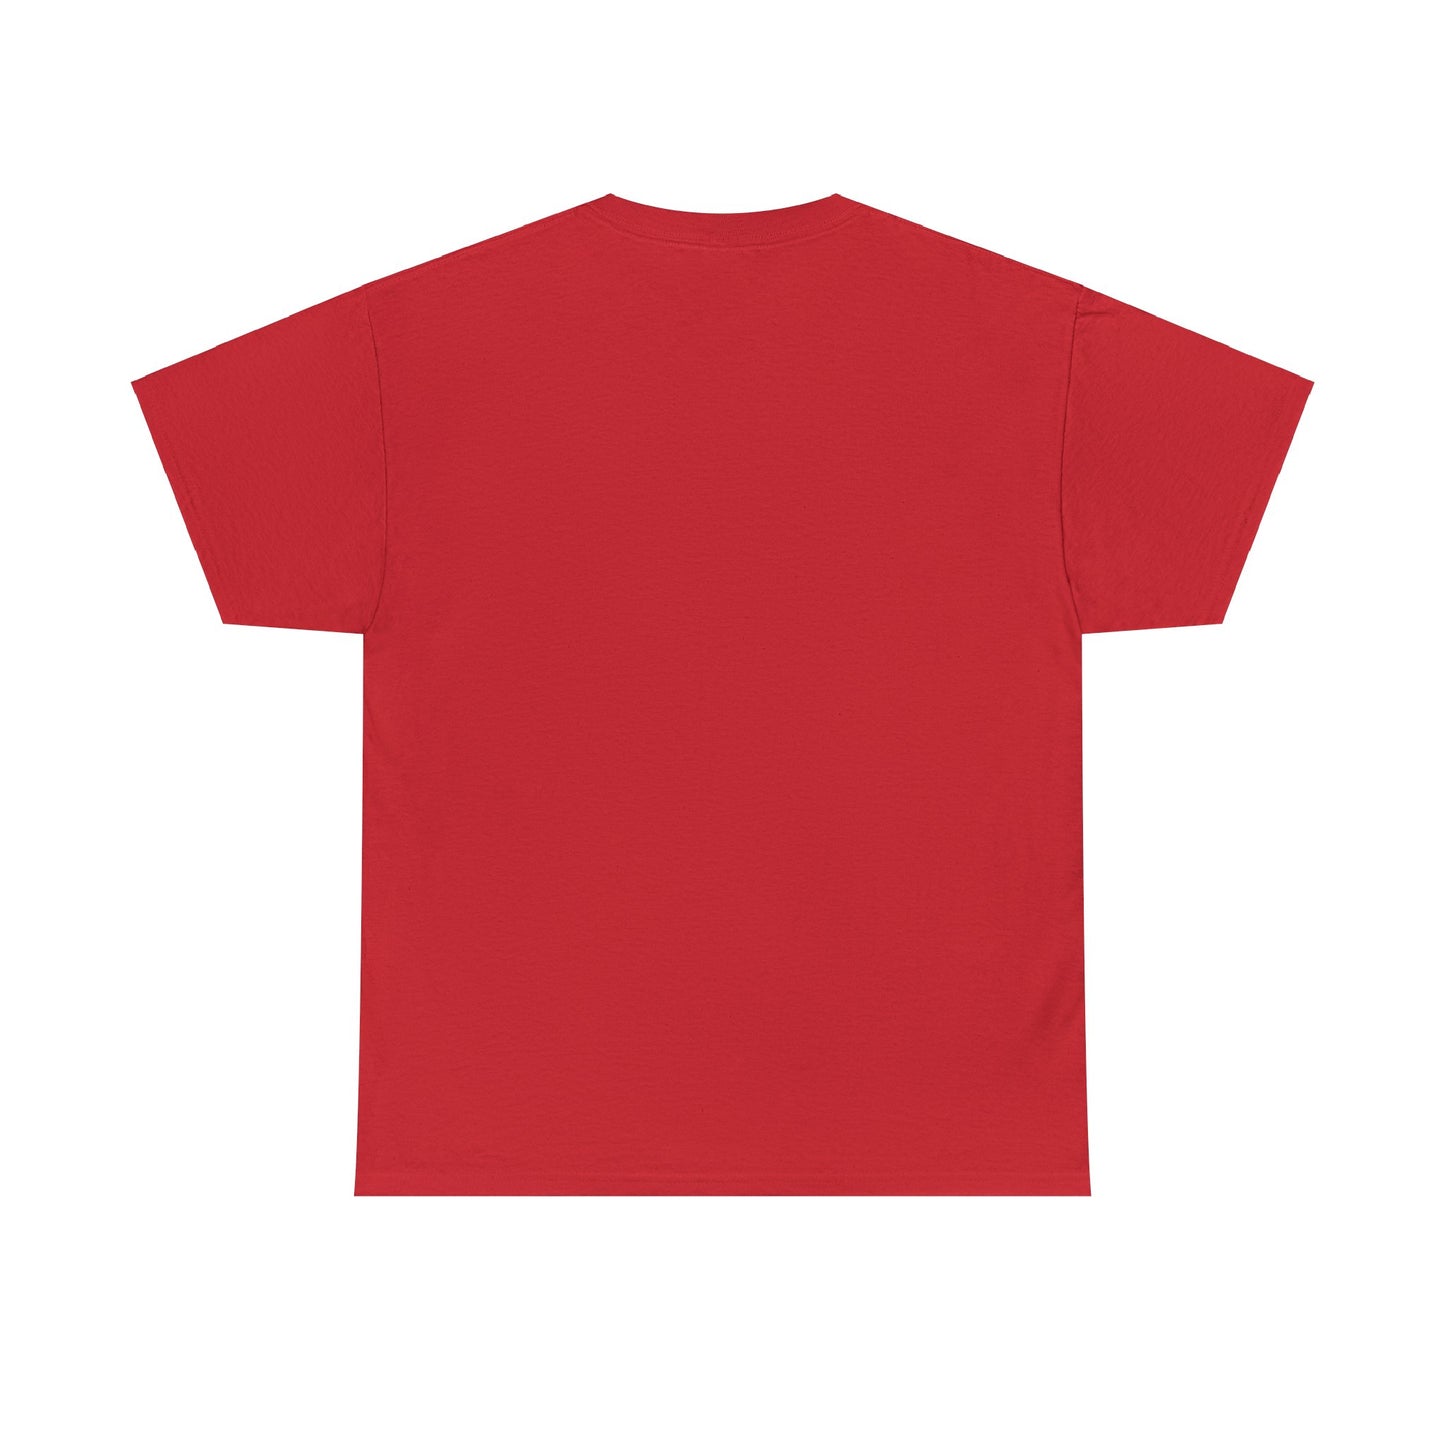 Yankabilly Trails DinoRc Logo T-Shirt S-5x Black White Green Blue Red